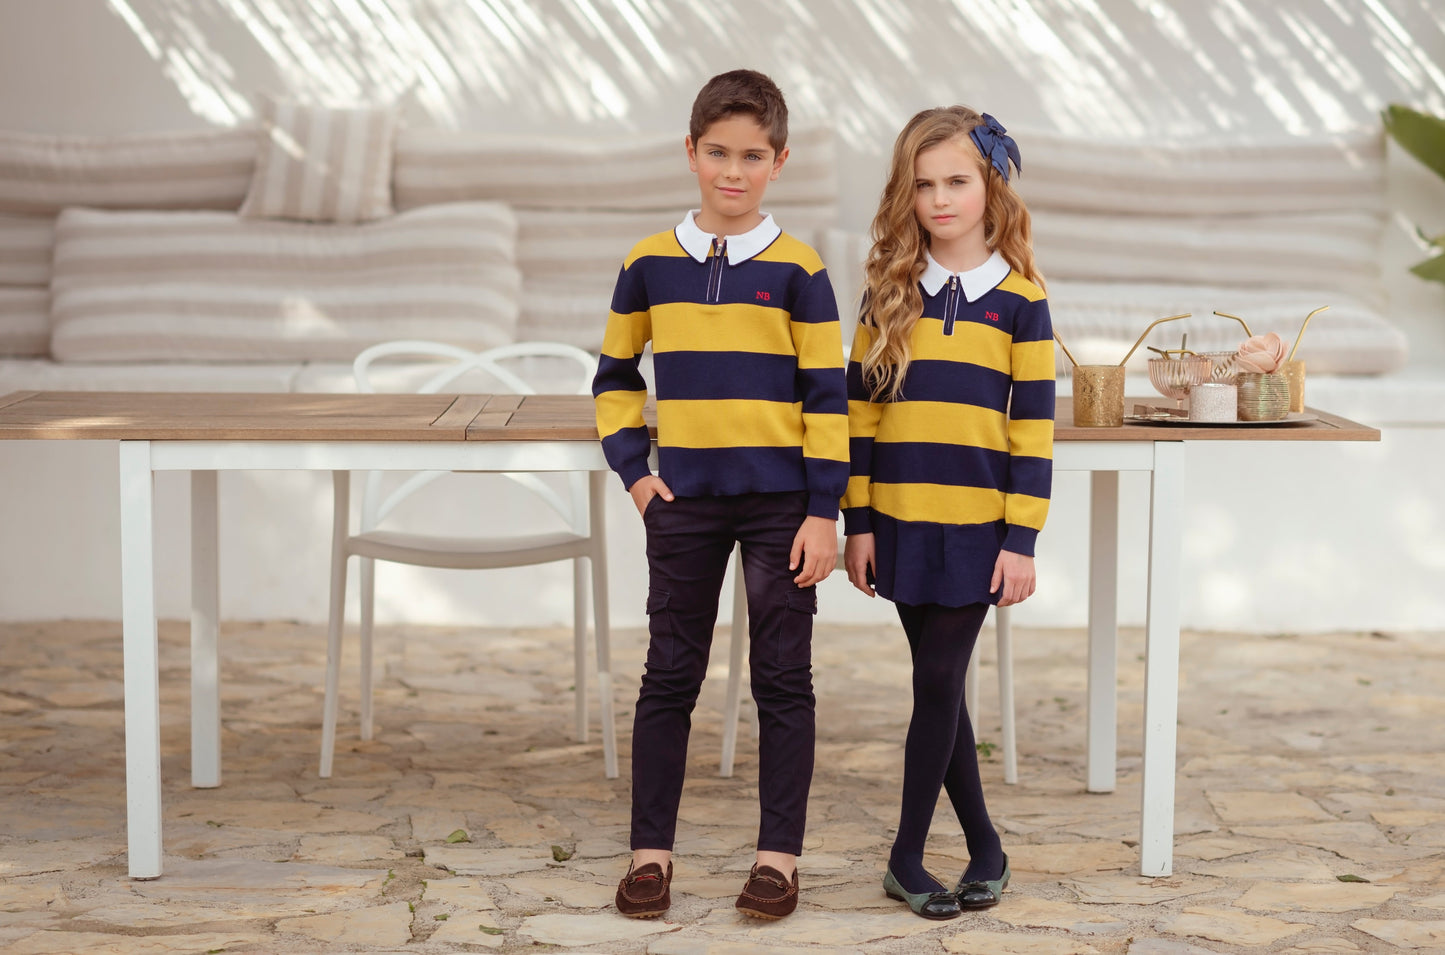 MIRANDA NEL BLU Navy & Mustard Stripe Girls Knitted Polo Dress - 1409